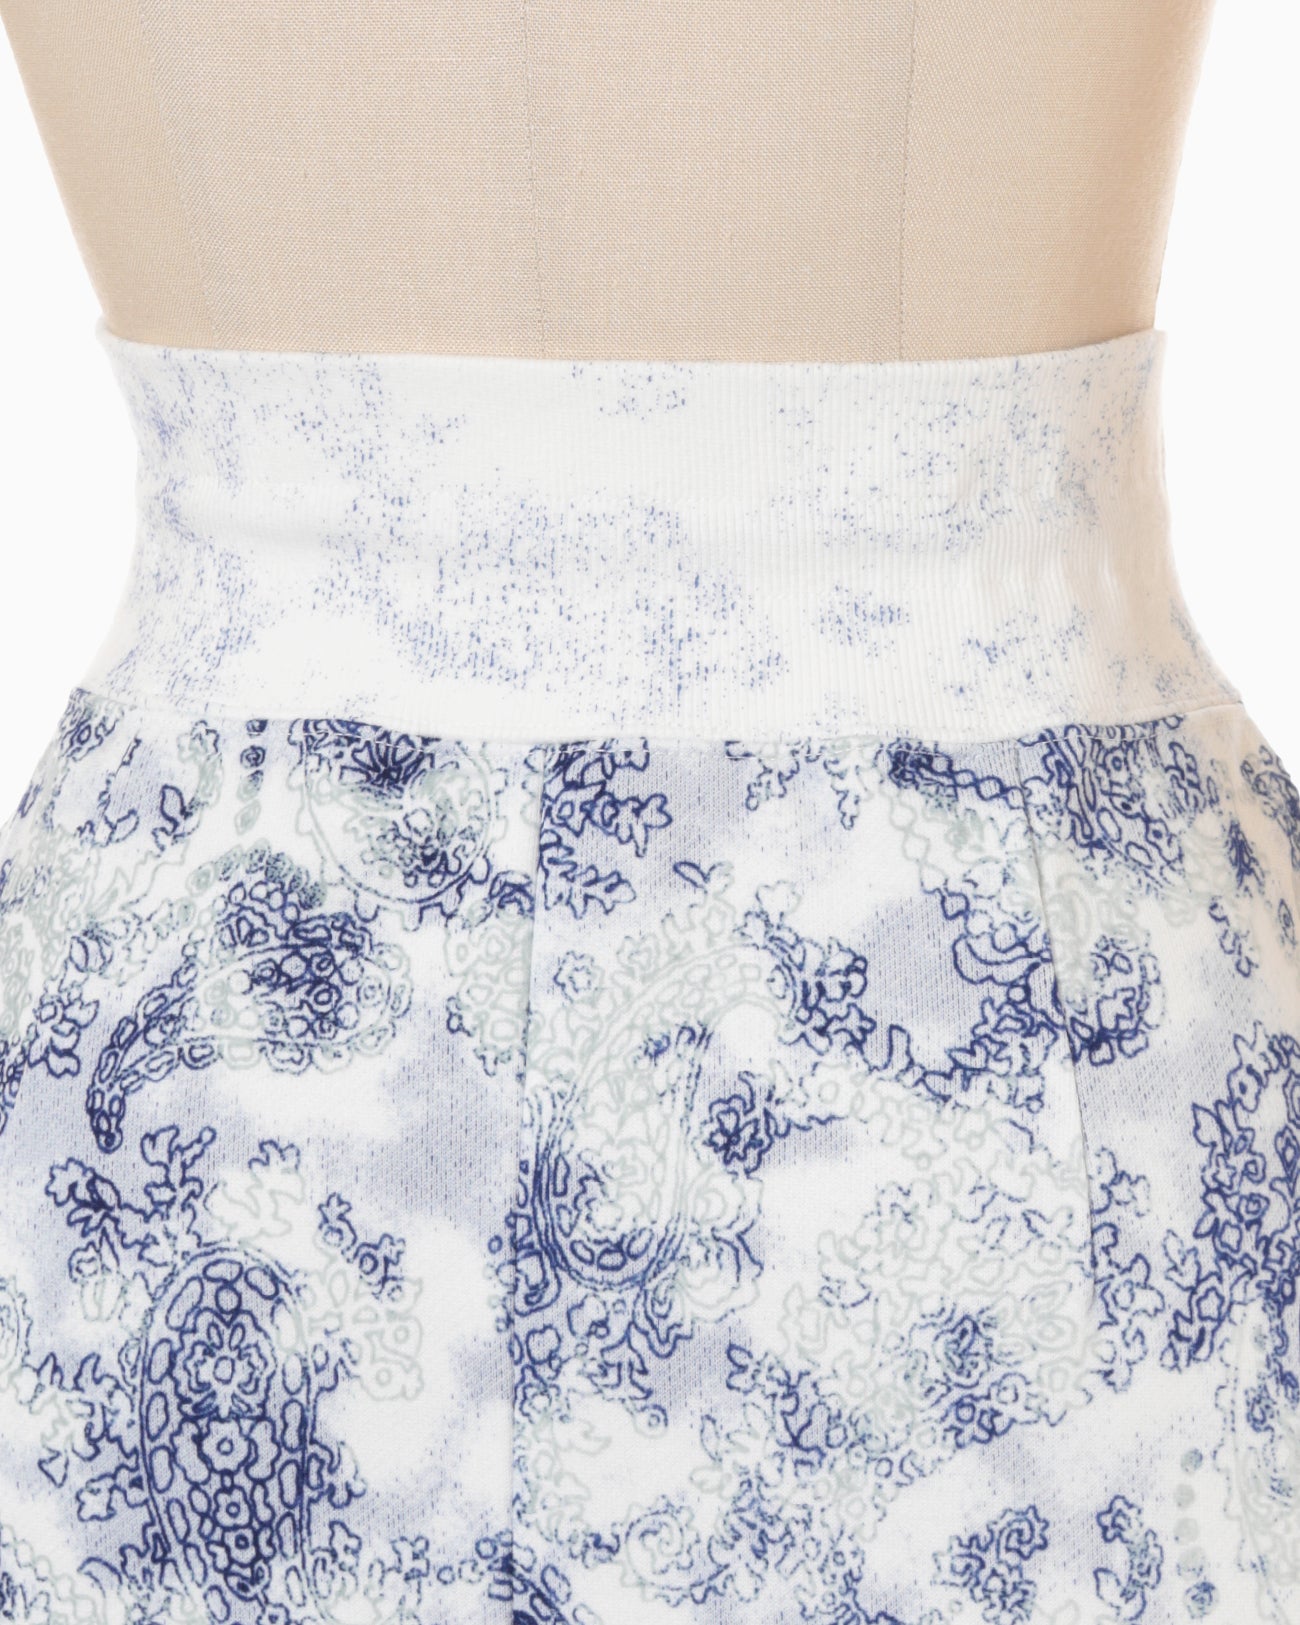 Floral Flock Printed Fleece Lining Skirt - blue